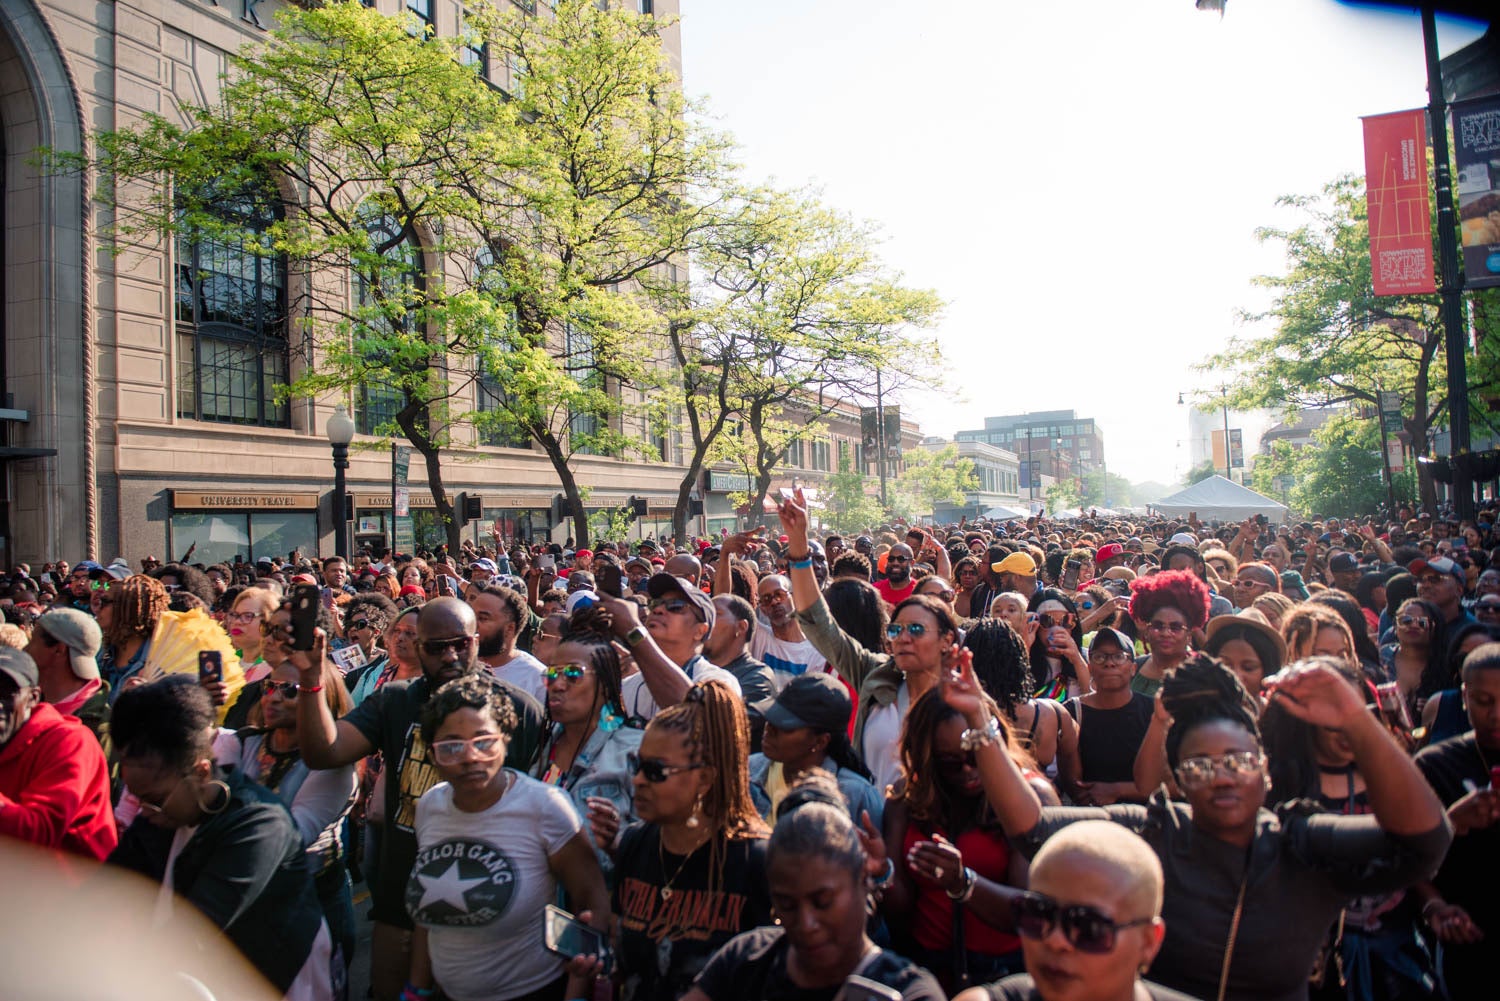 ‘Purveyor of Black Joy’: This Entrepreneur Is Behind One Of Chicago's Largest Black Festivals